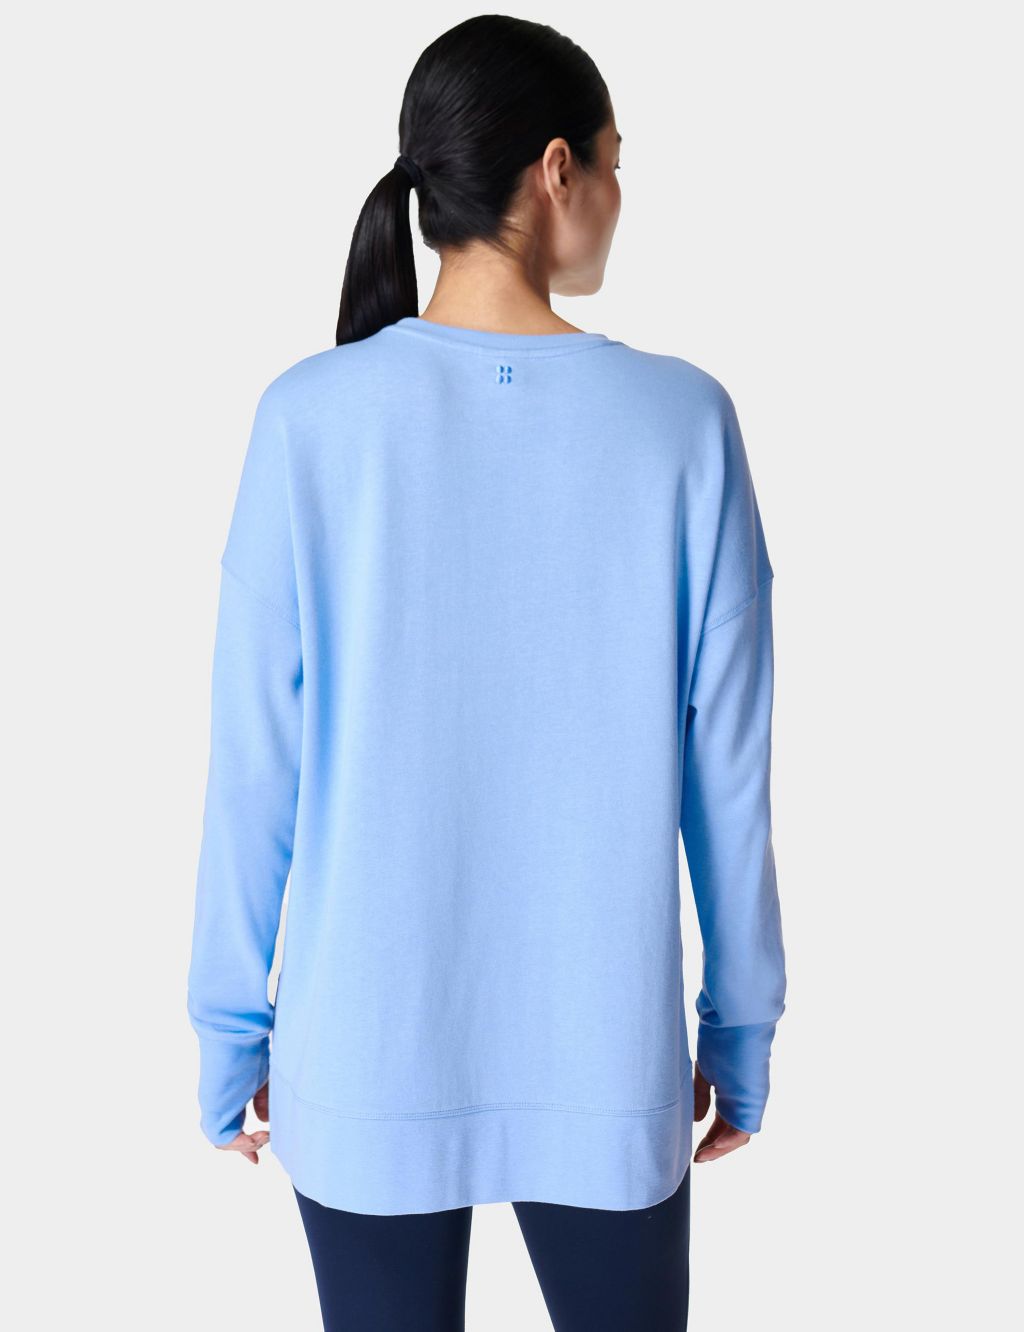 After Class Cotton Blend Longline Sweatshirt image 4